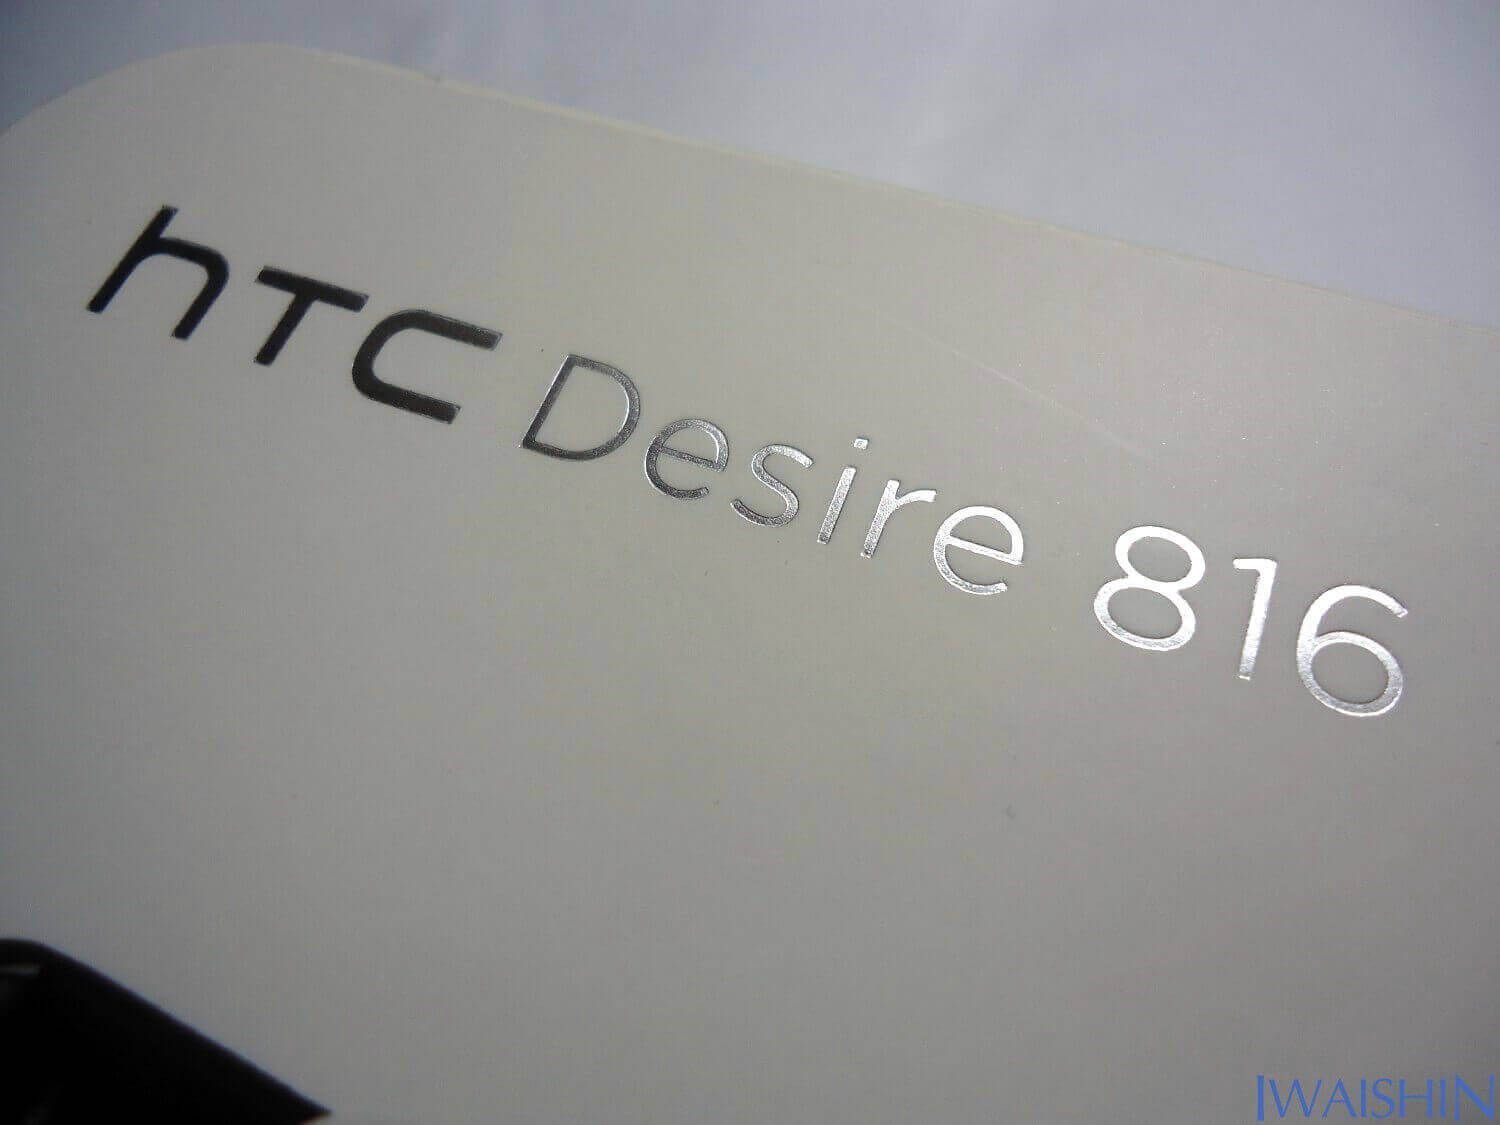 HTC_D816 (2)